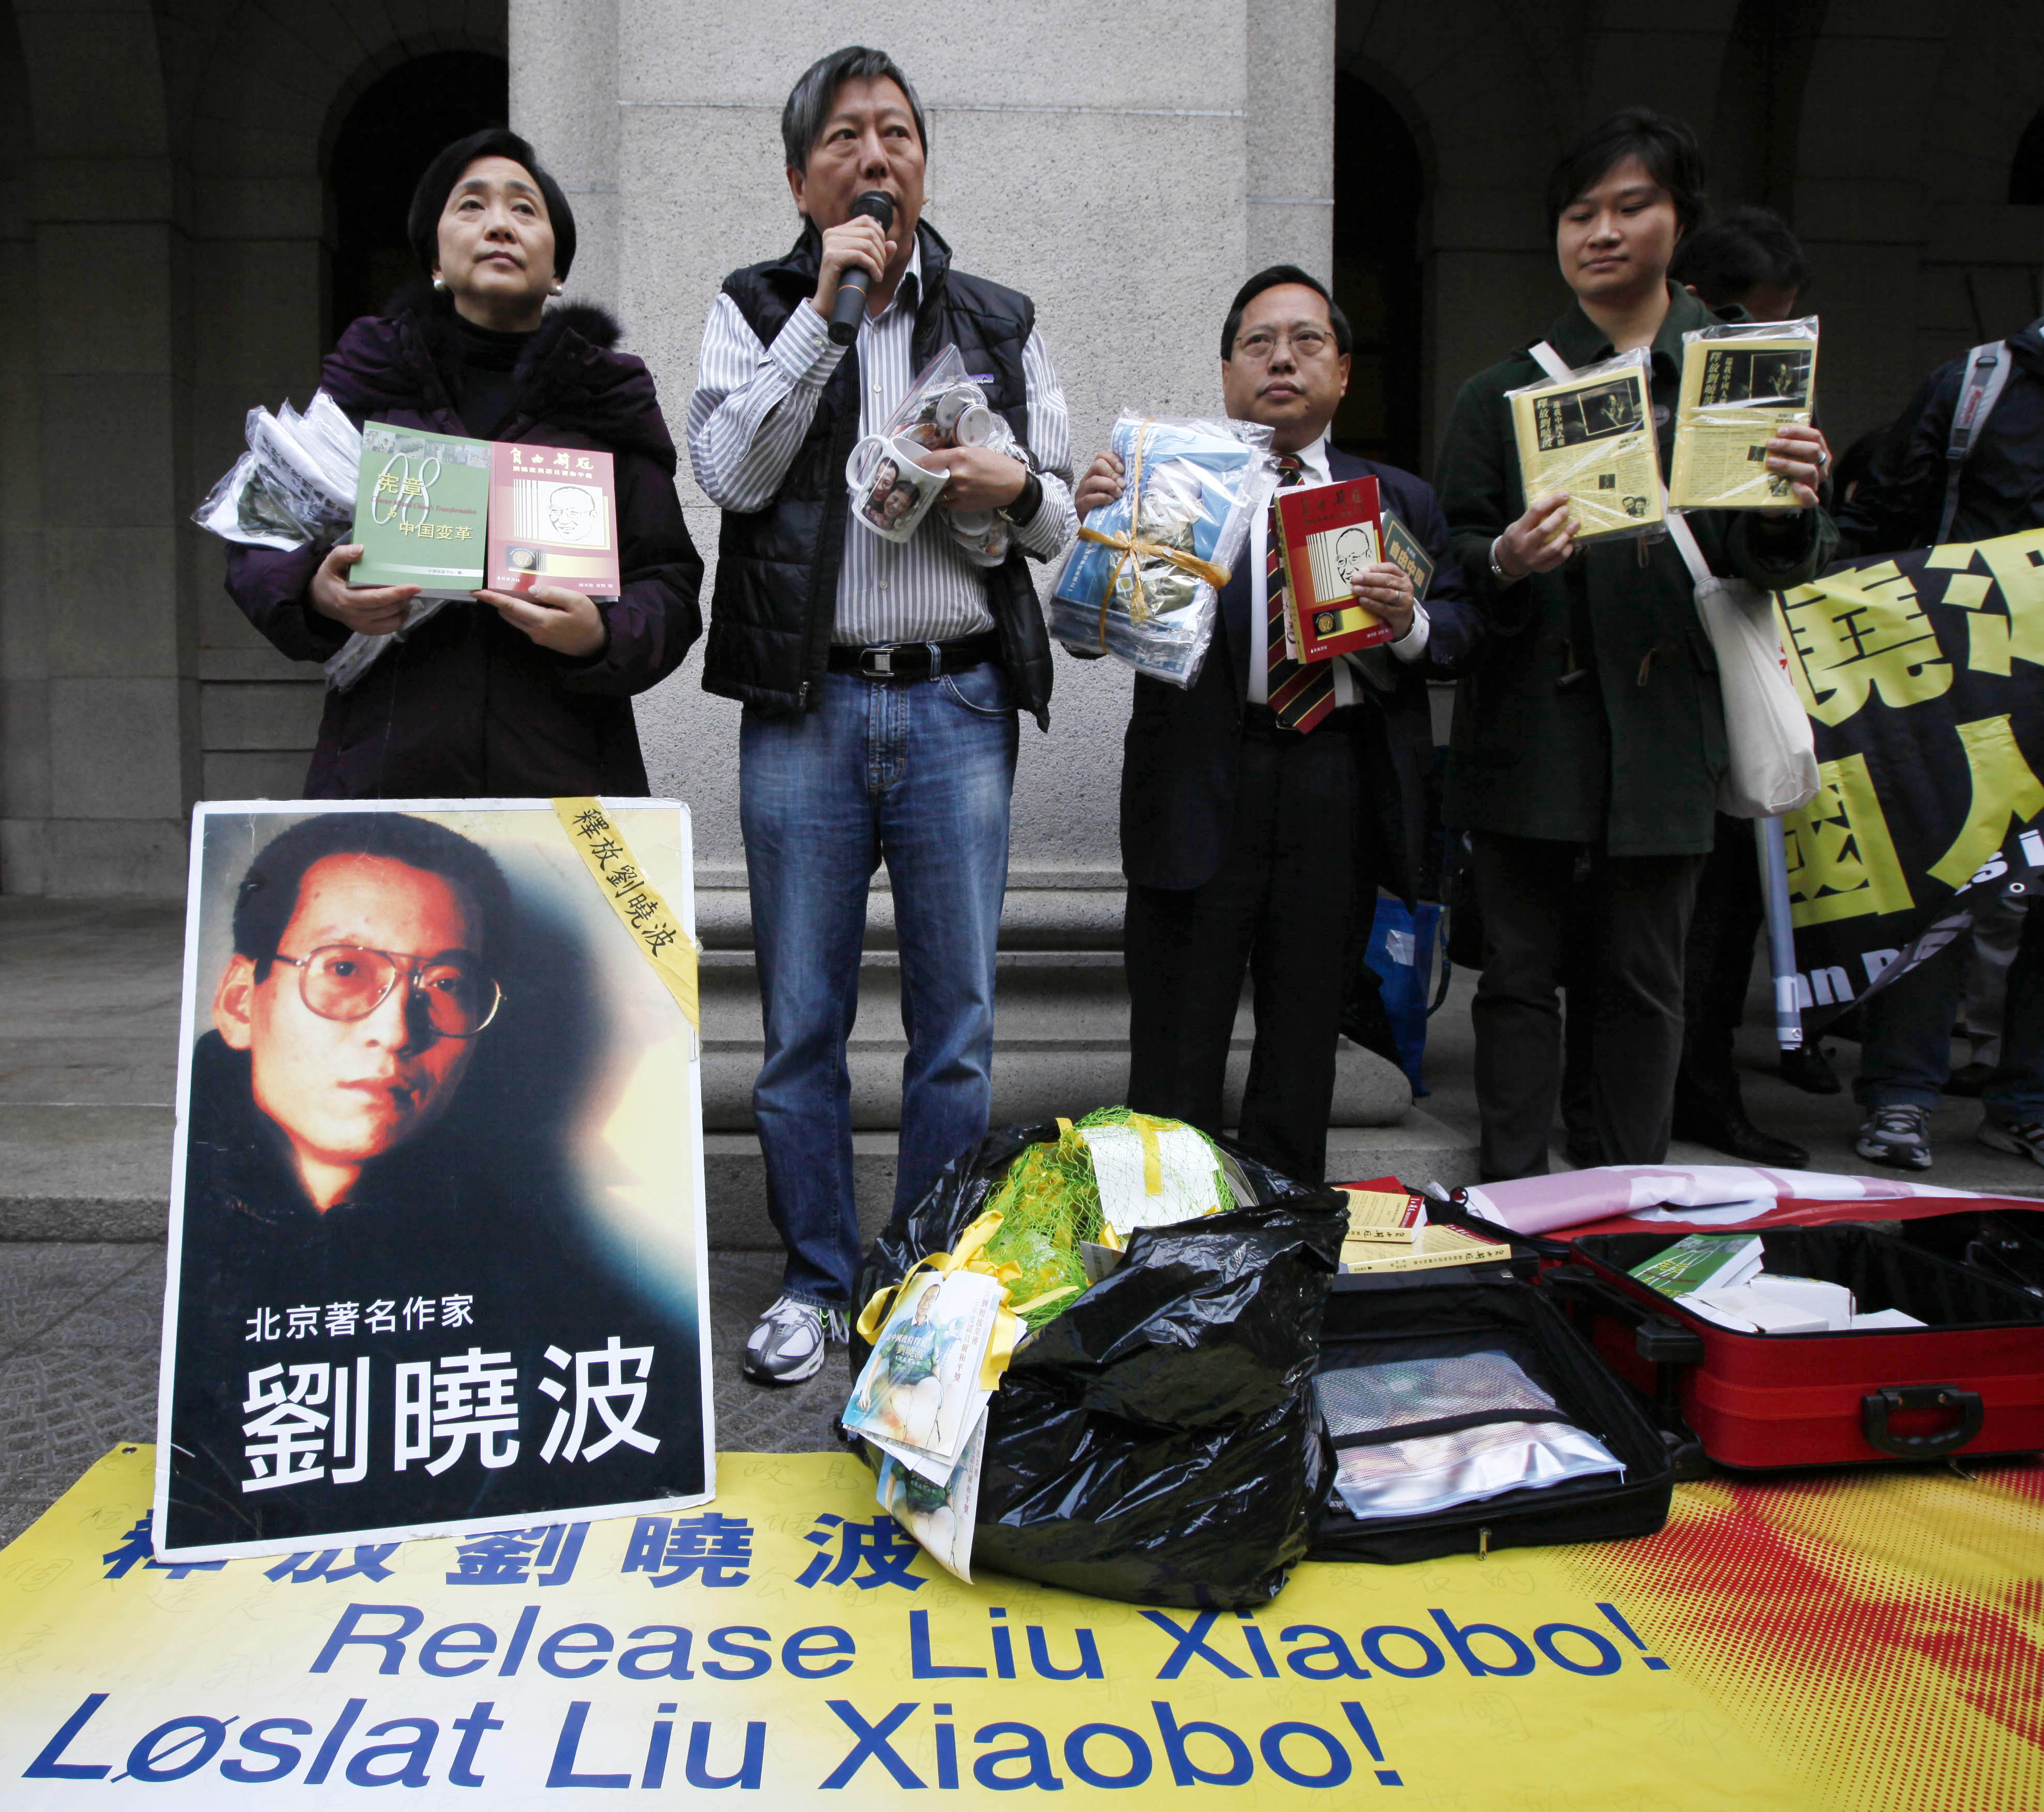 Fredspriset, Liu Xiaobo, Kina